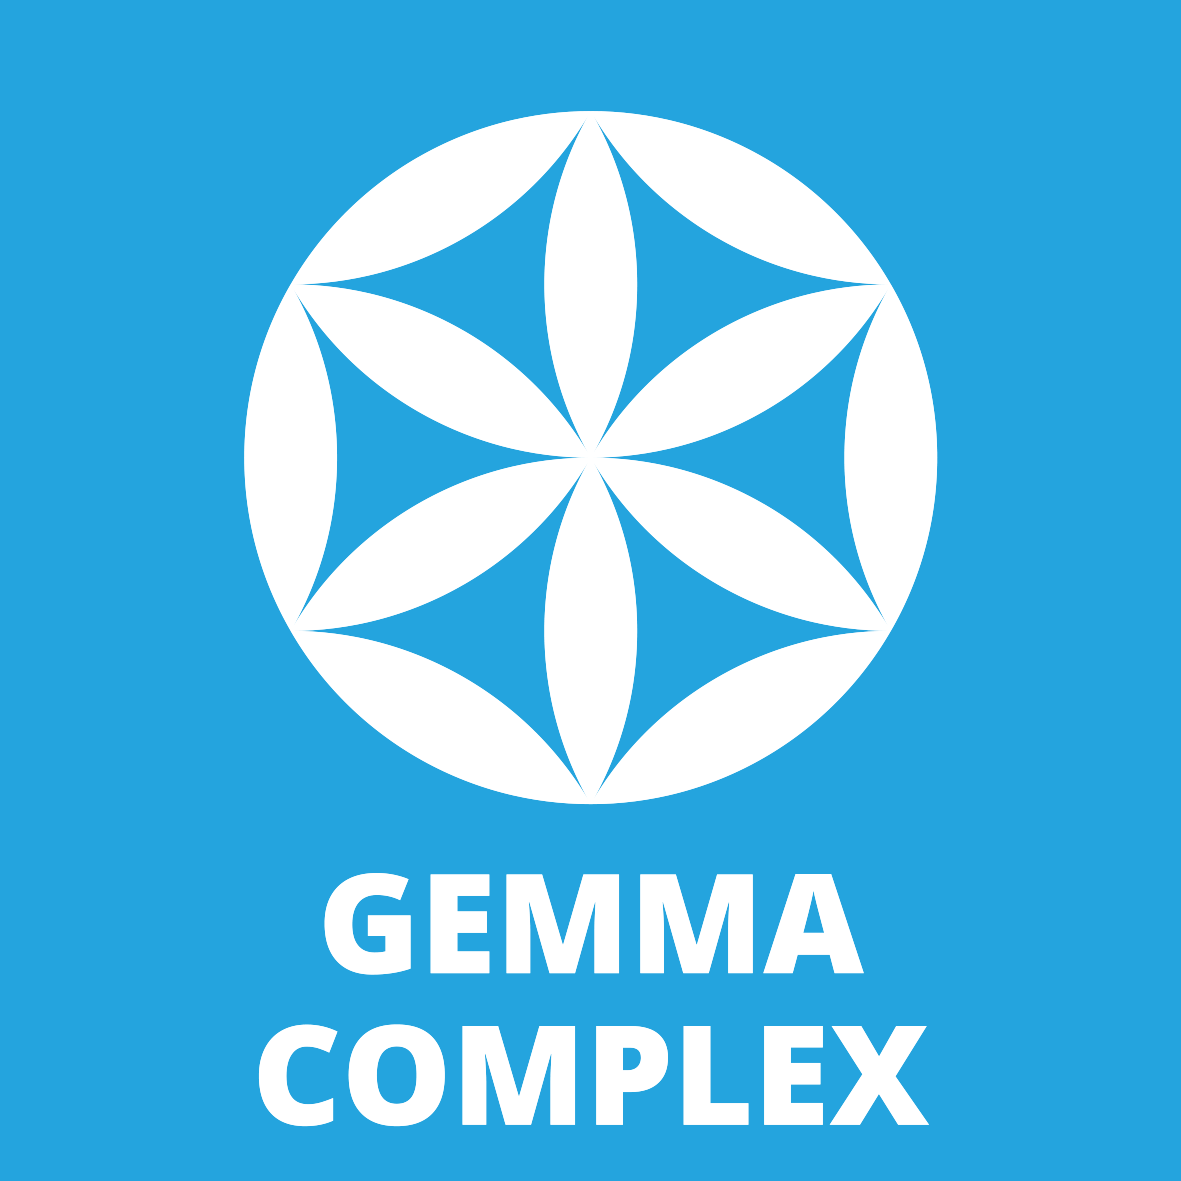 Gemma Complex